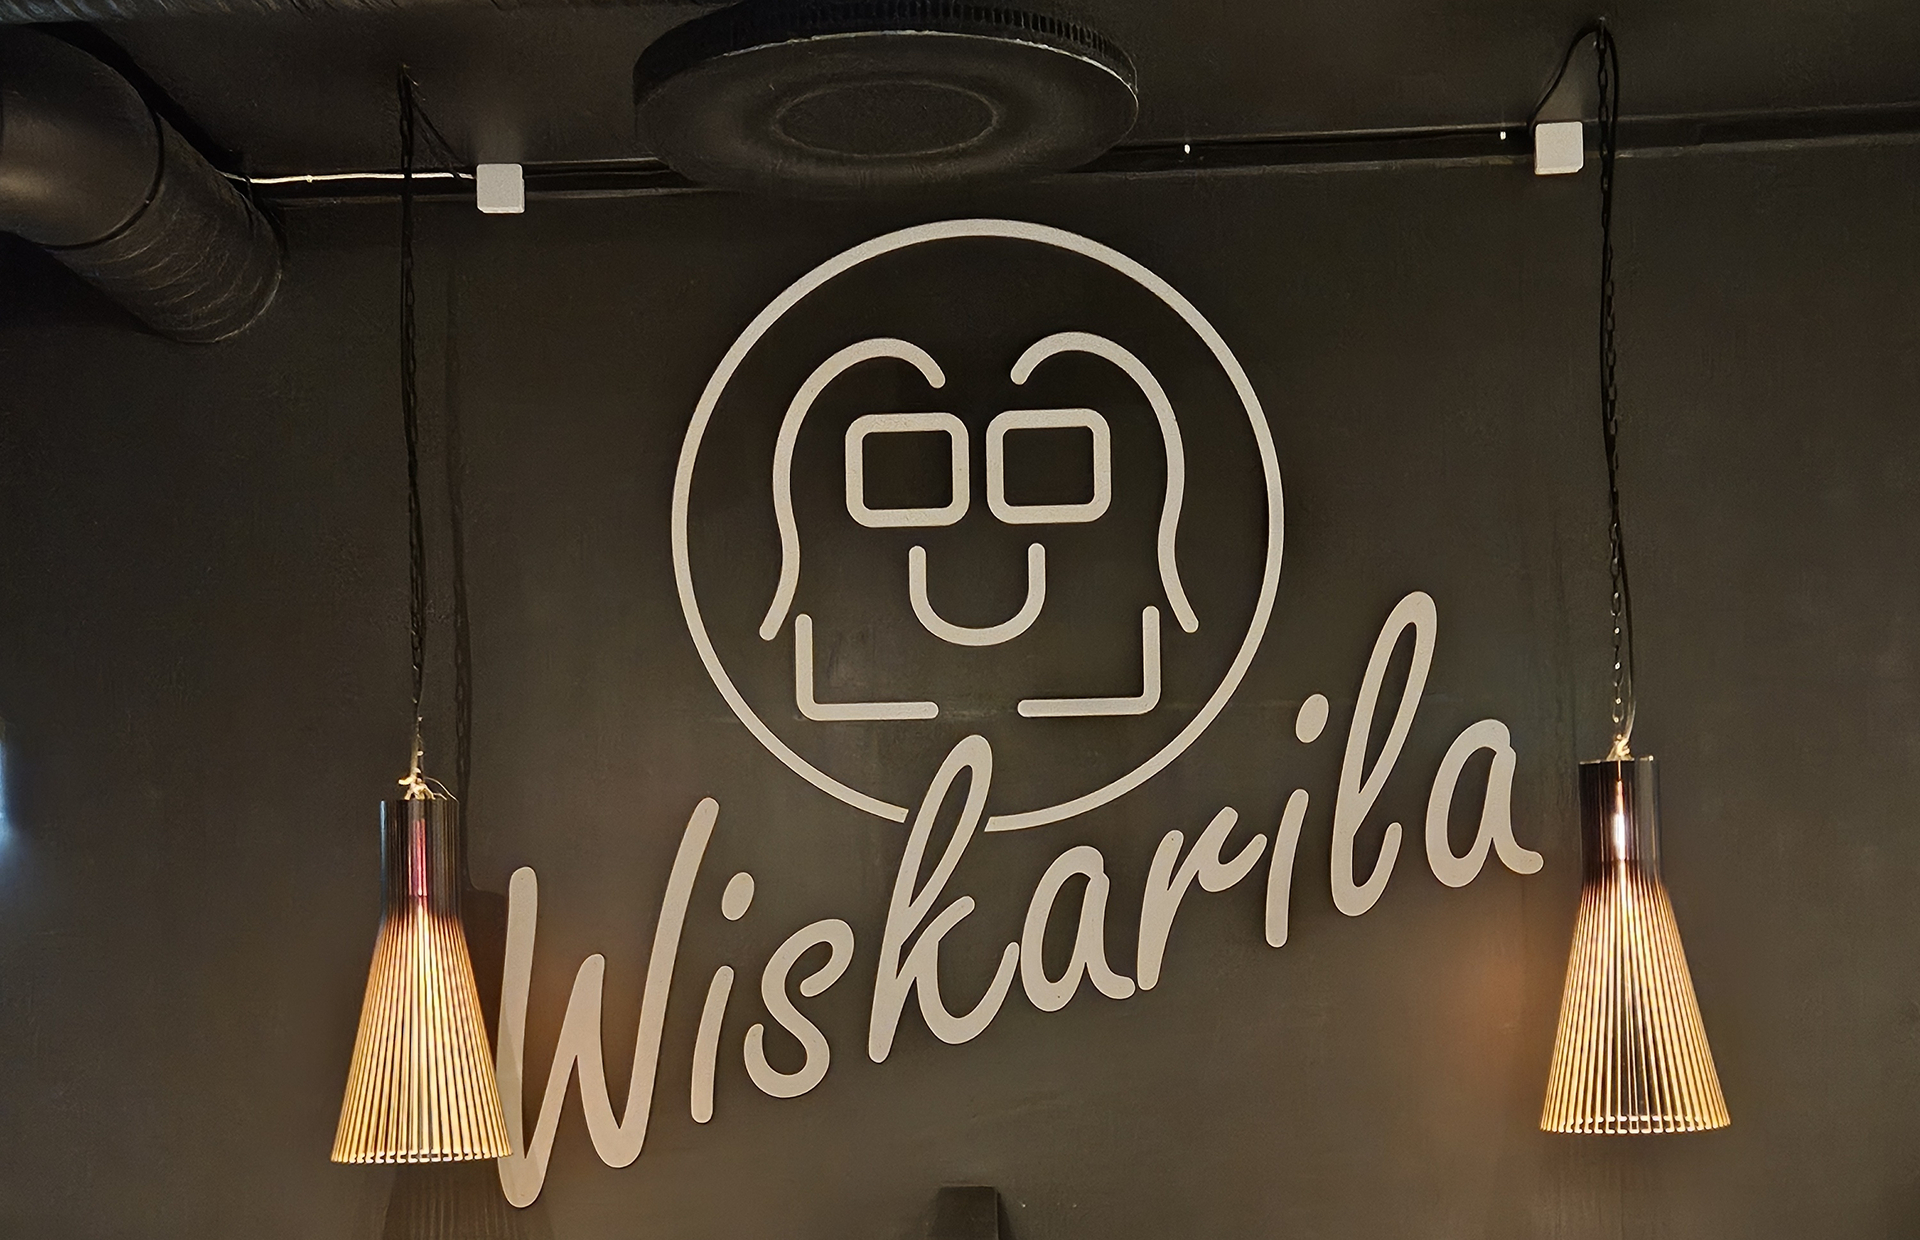 Wiskarila_logo.jpg